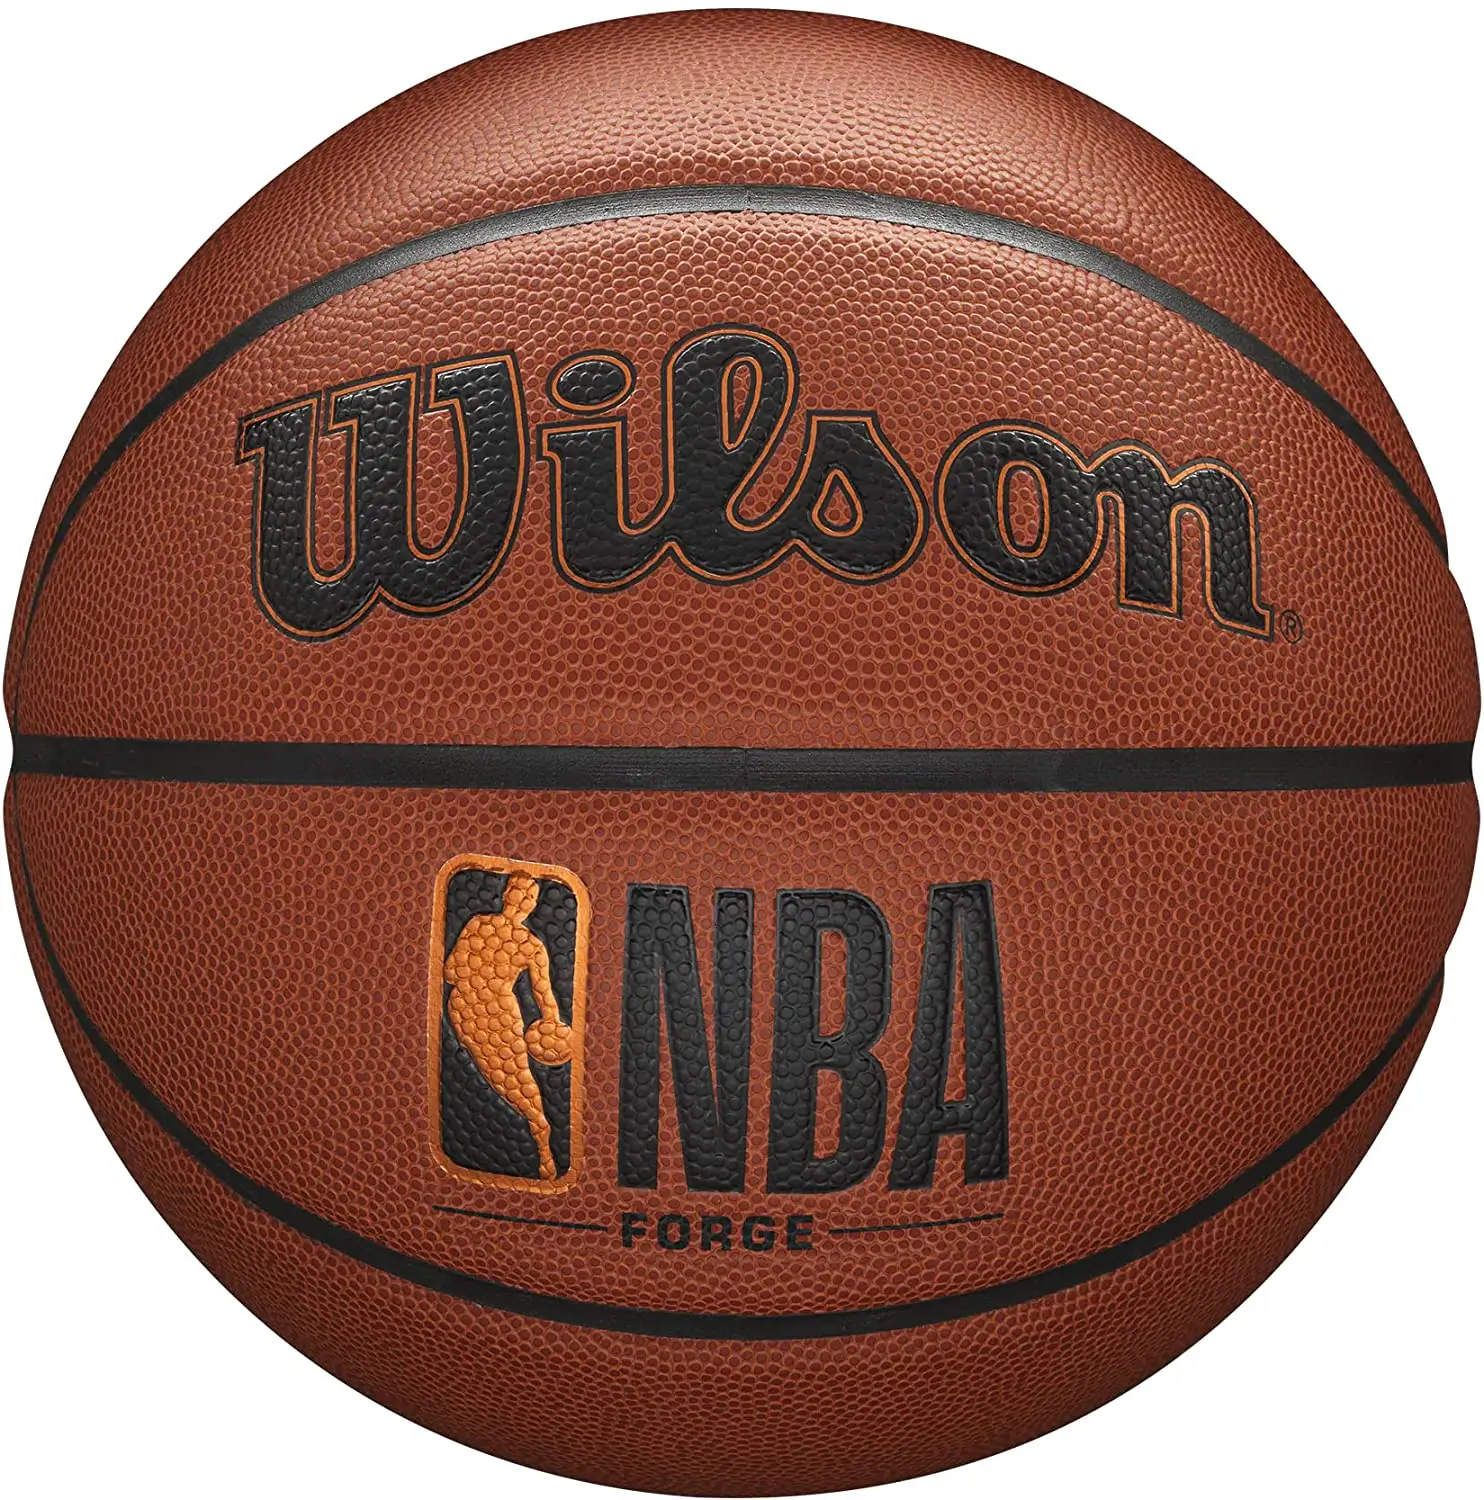 WILSON NBA Forge Series Outdoor Basketballs